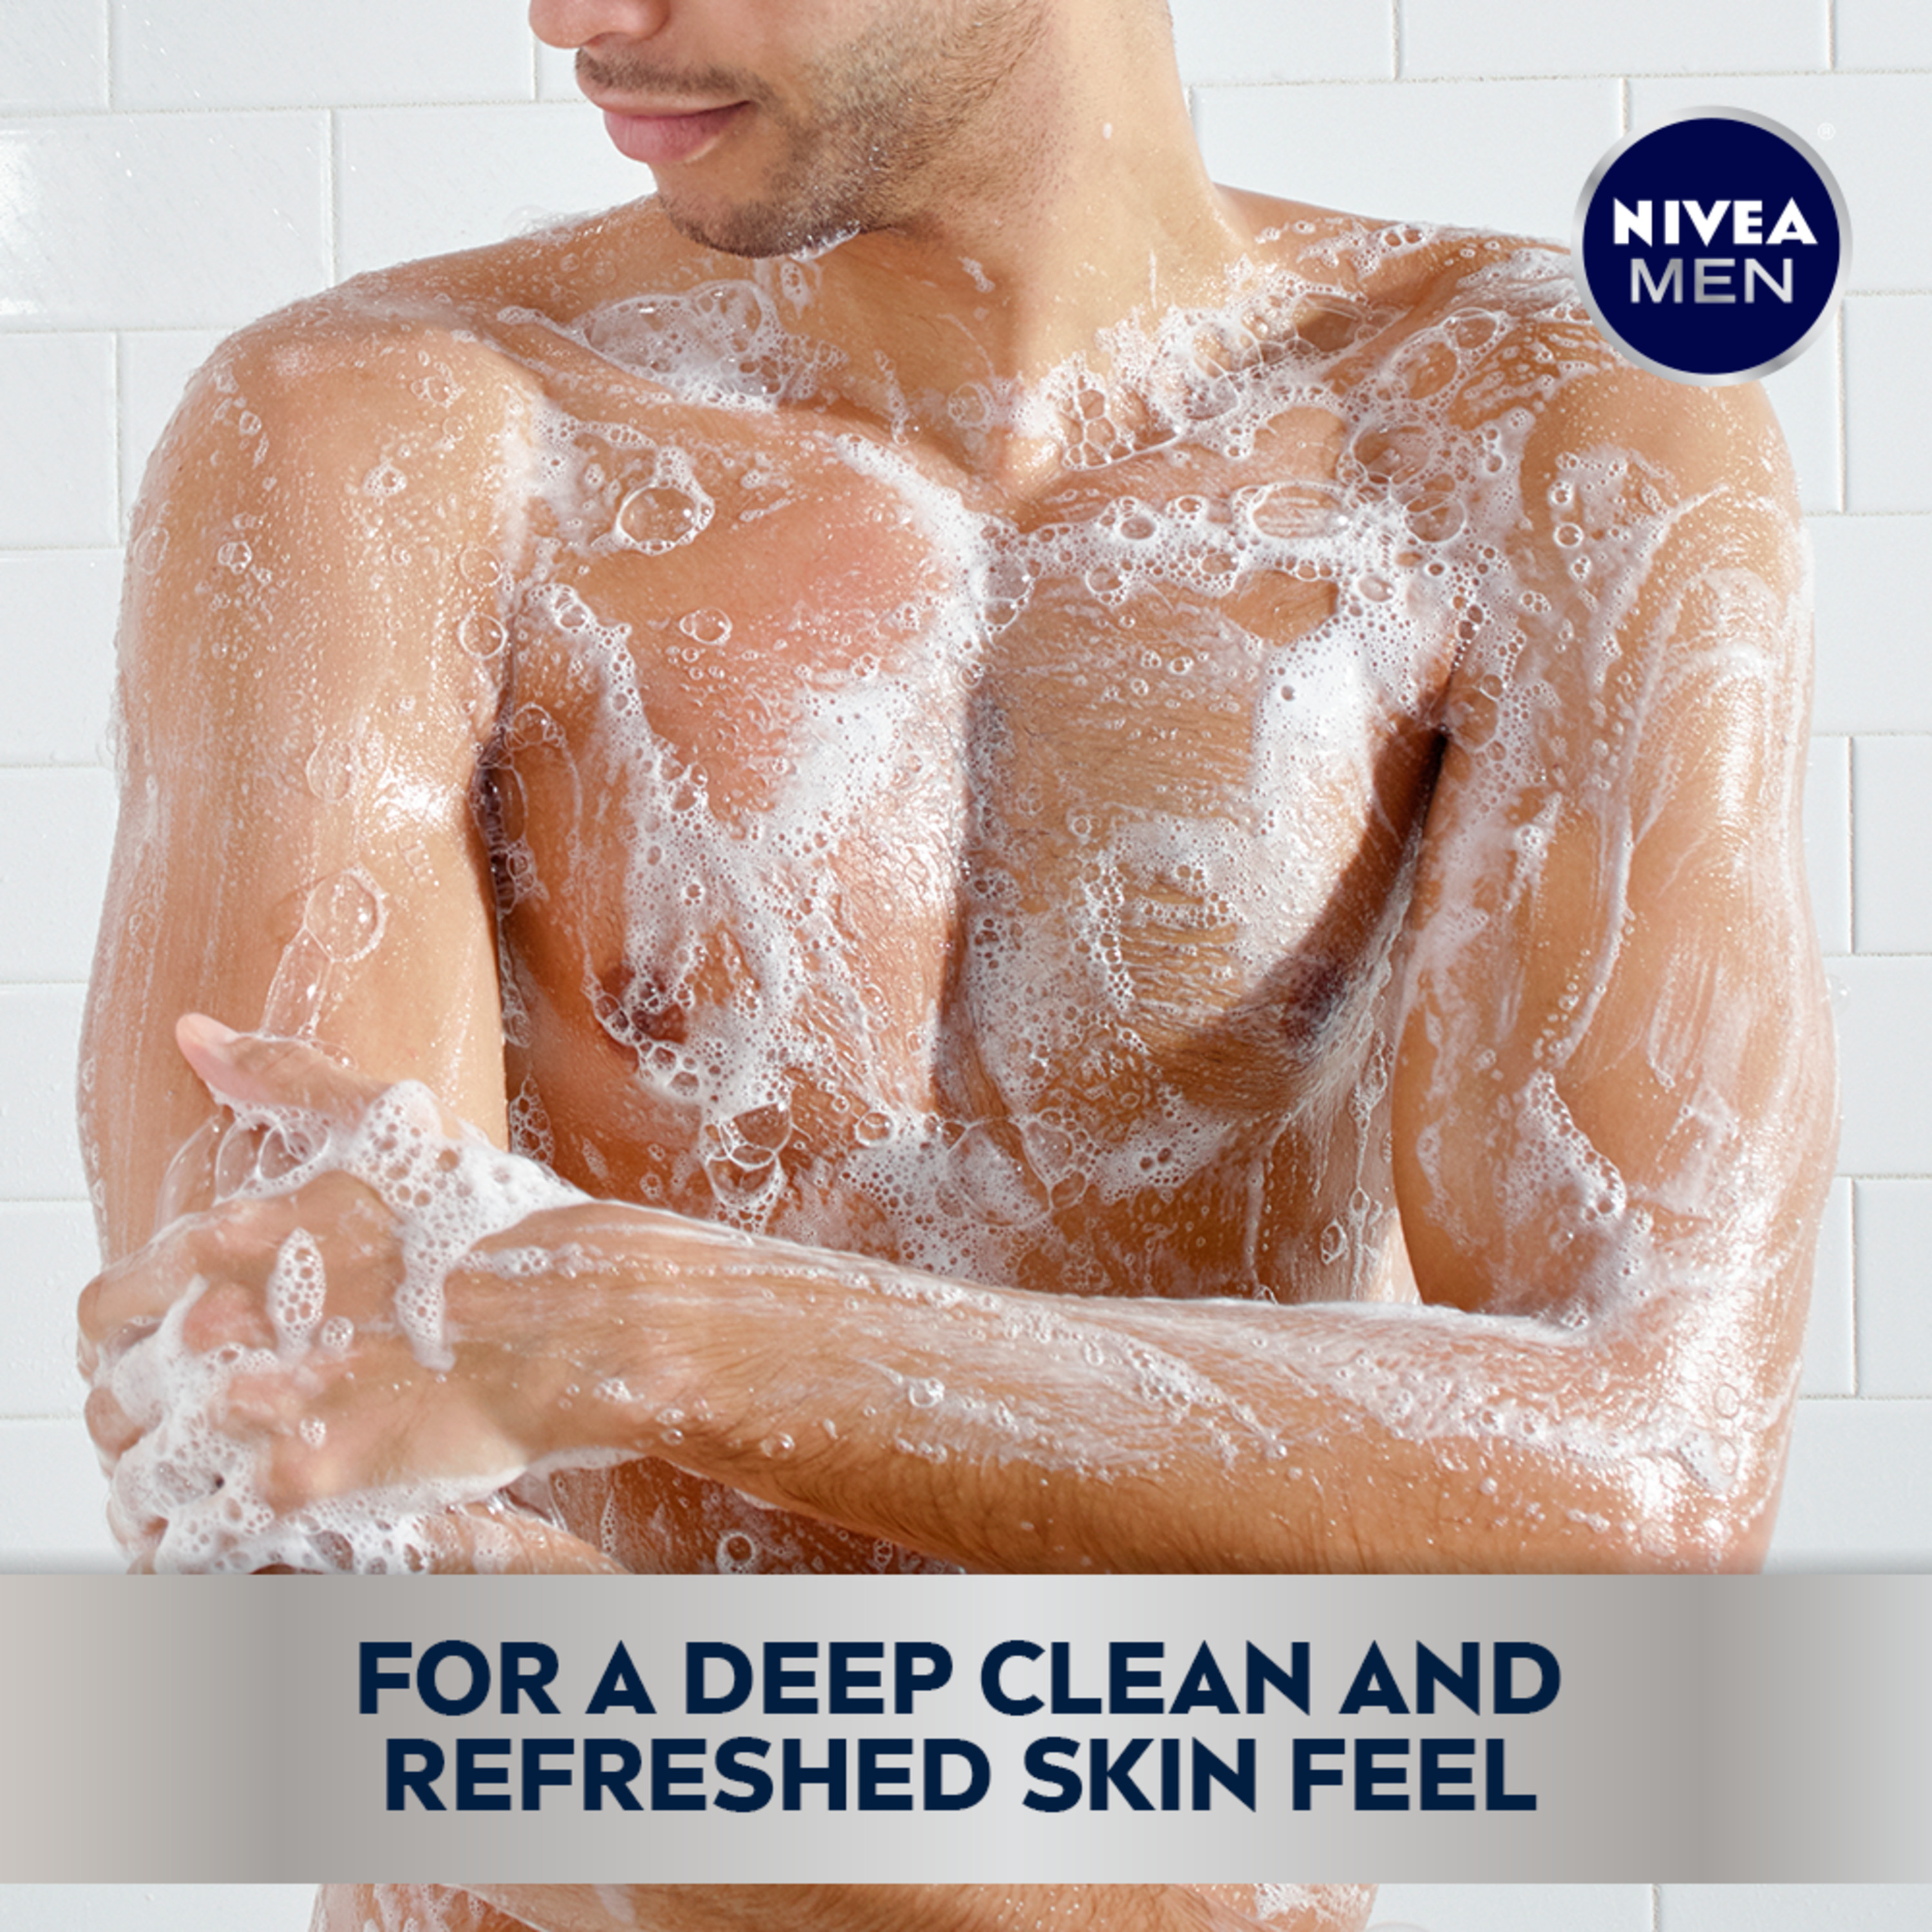 NIVEA MEN DEEP Active Clean Charcoal Body Wash, 16.9 Fl Oz Bottle - image 4 of 6